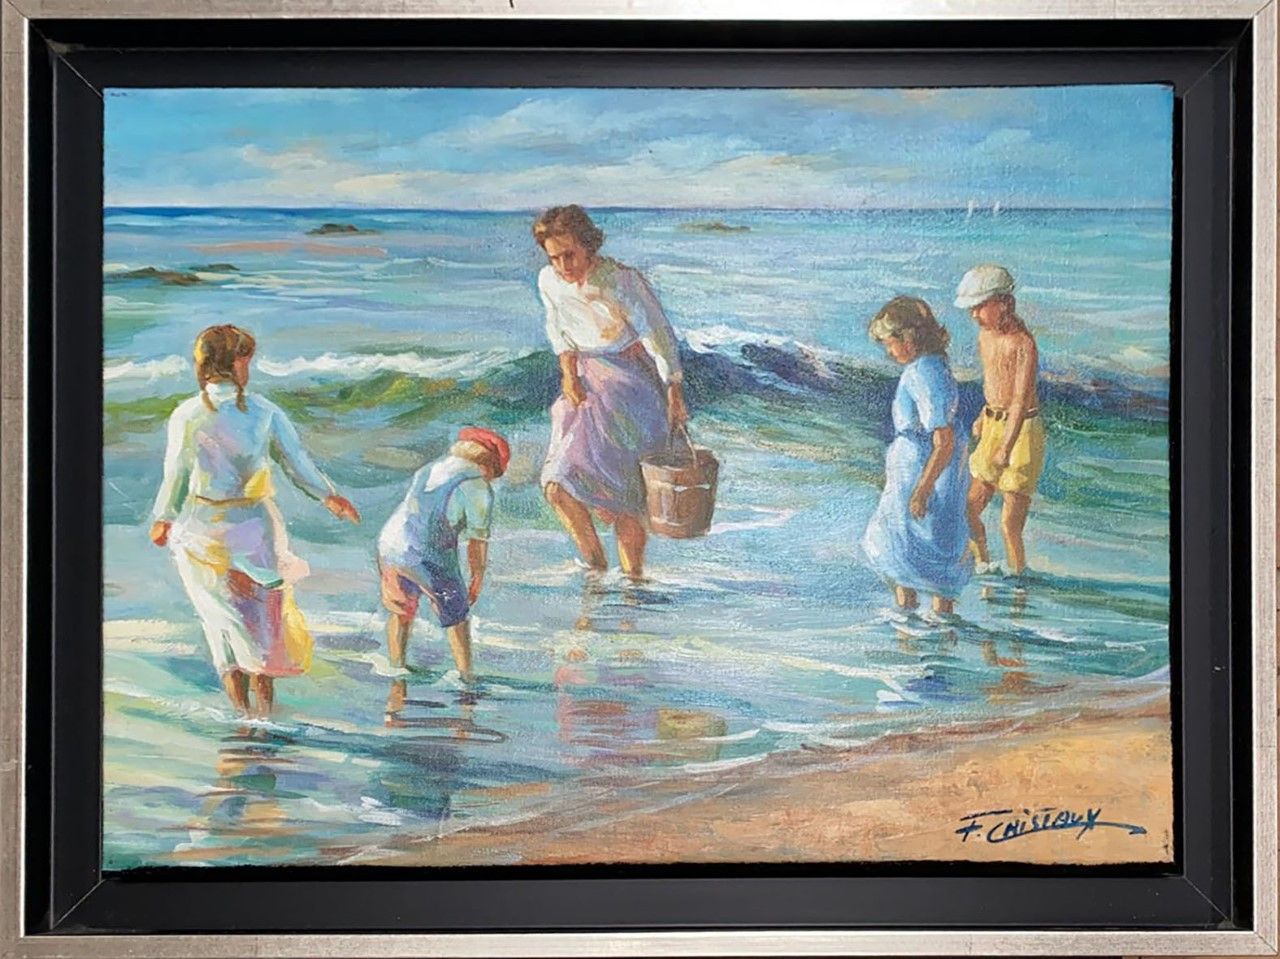 CRISTAUX Francis (1950-) 布面油画《波浪中的母亲和孩子》，右下角有签名。有框尺寸37 x 47厘米。